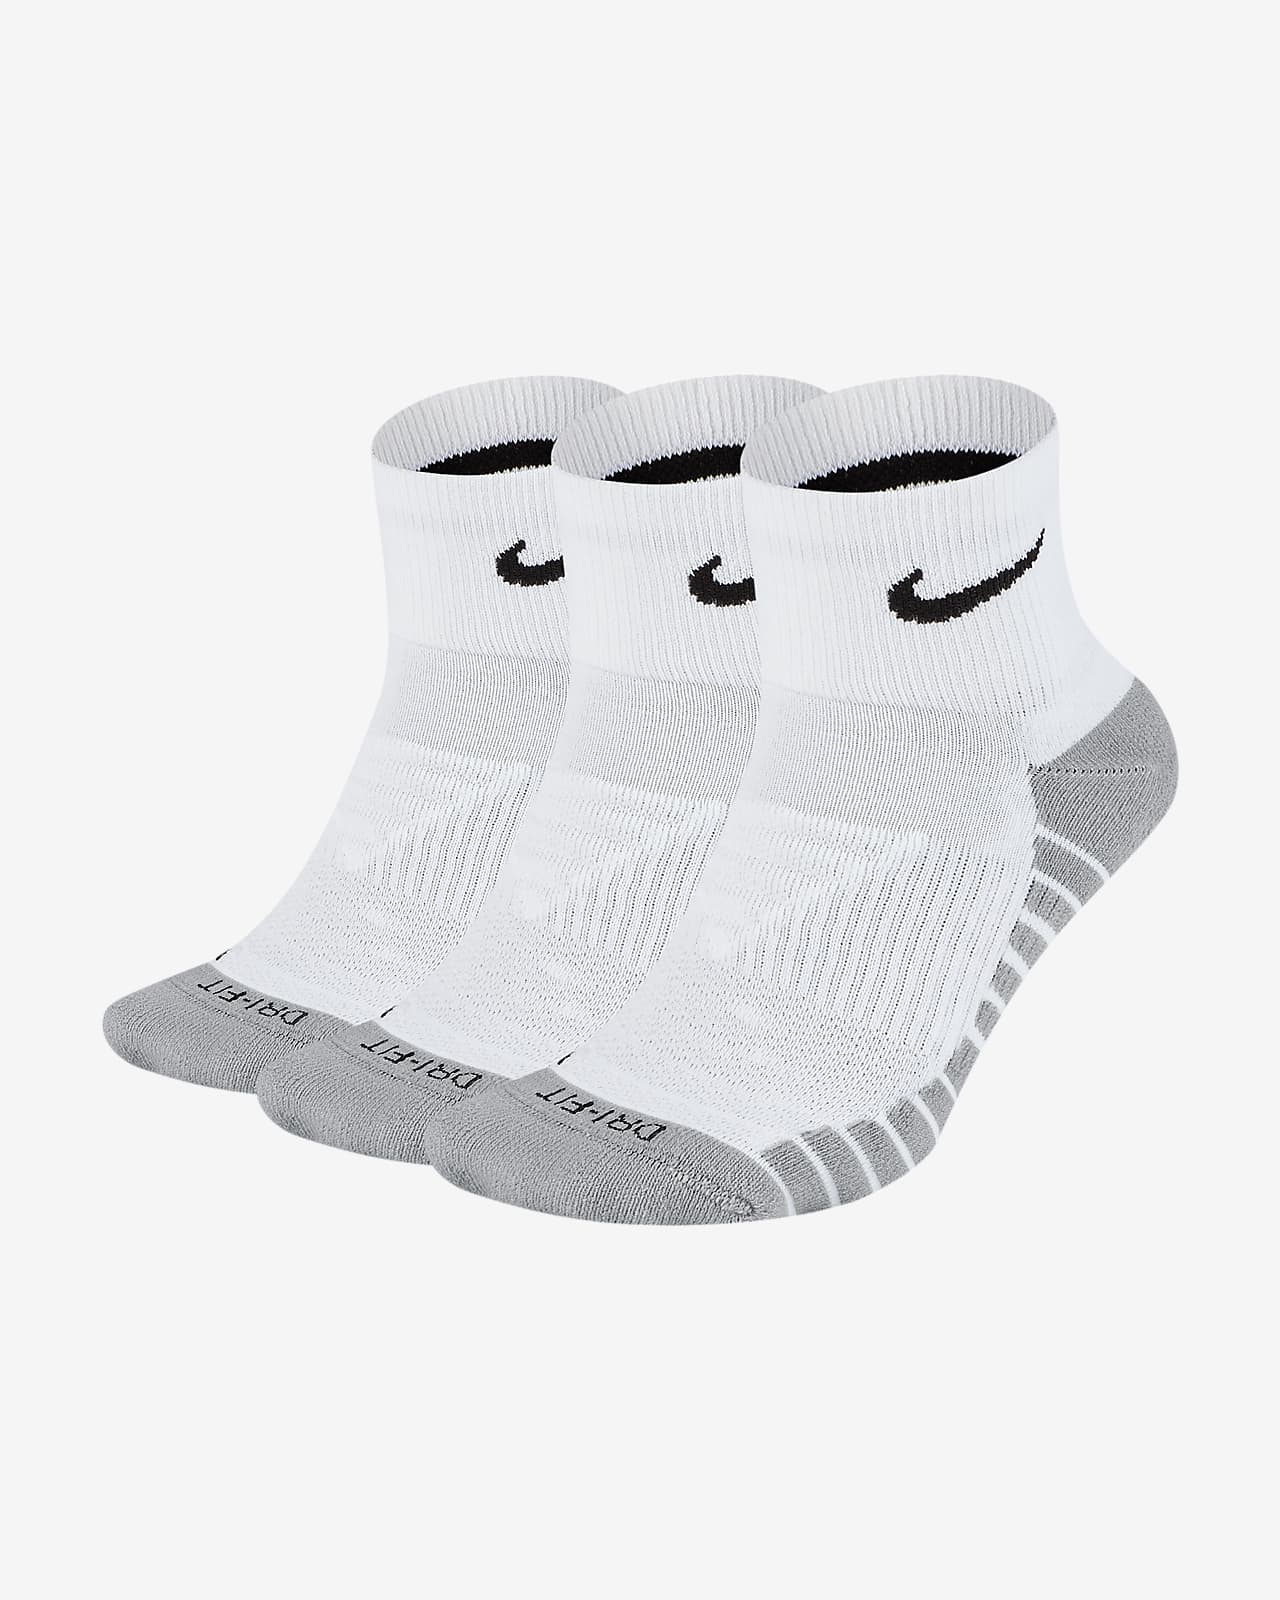 سيدي سينك Nike Everyday Max Cushioned Training Ankle Socks (3 Pairs) سيدي سينك